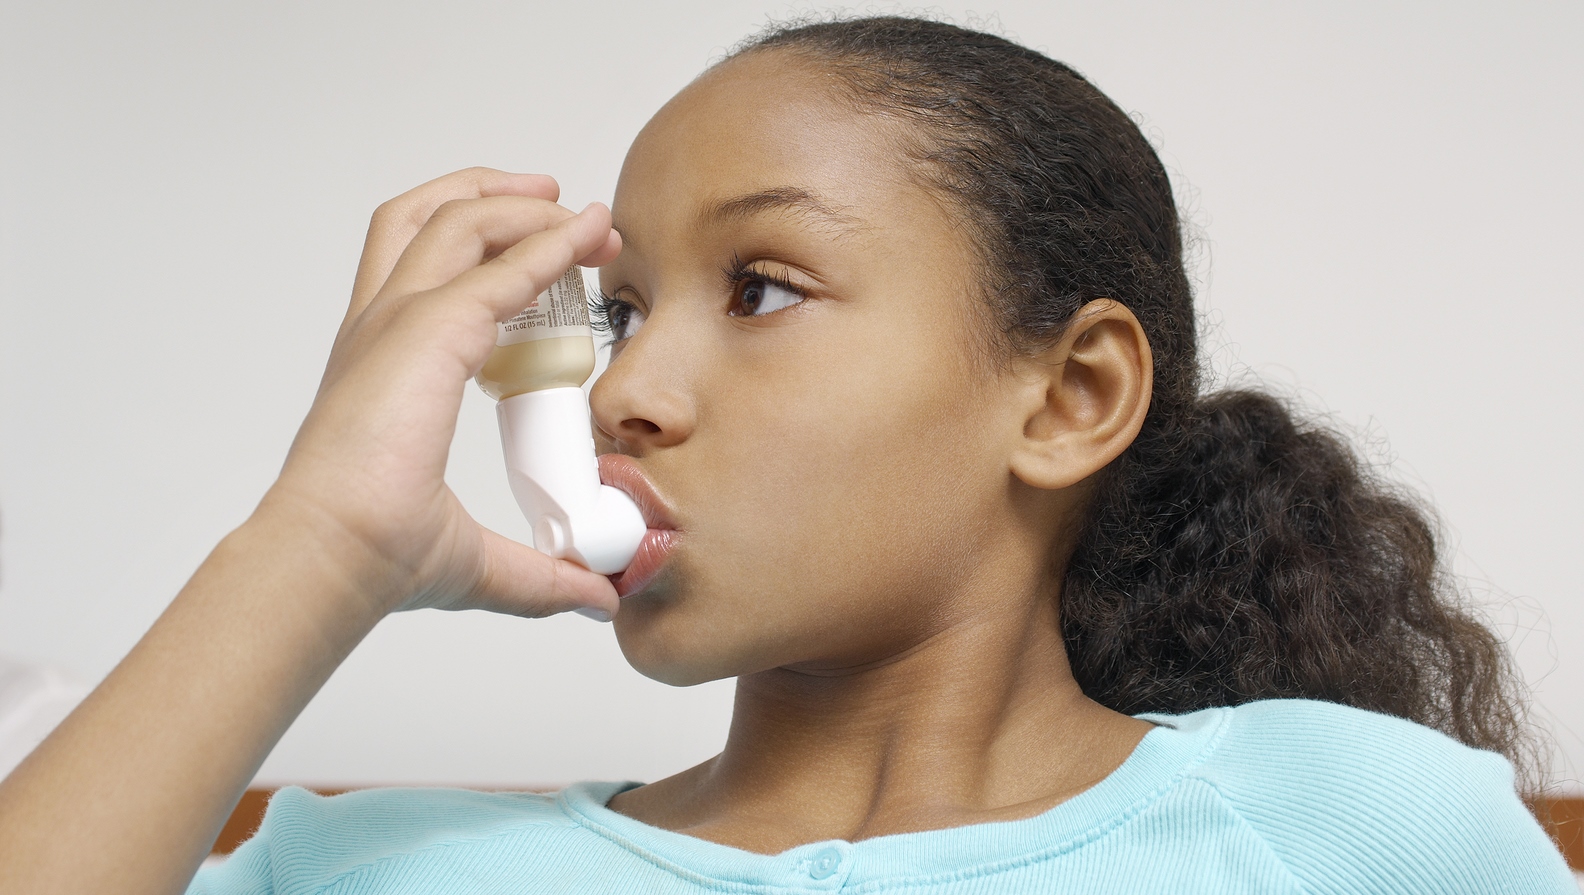 bigstock-Portrait-of-a-girl-using-asthm-41601367